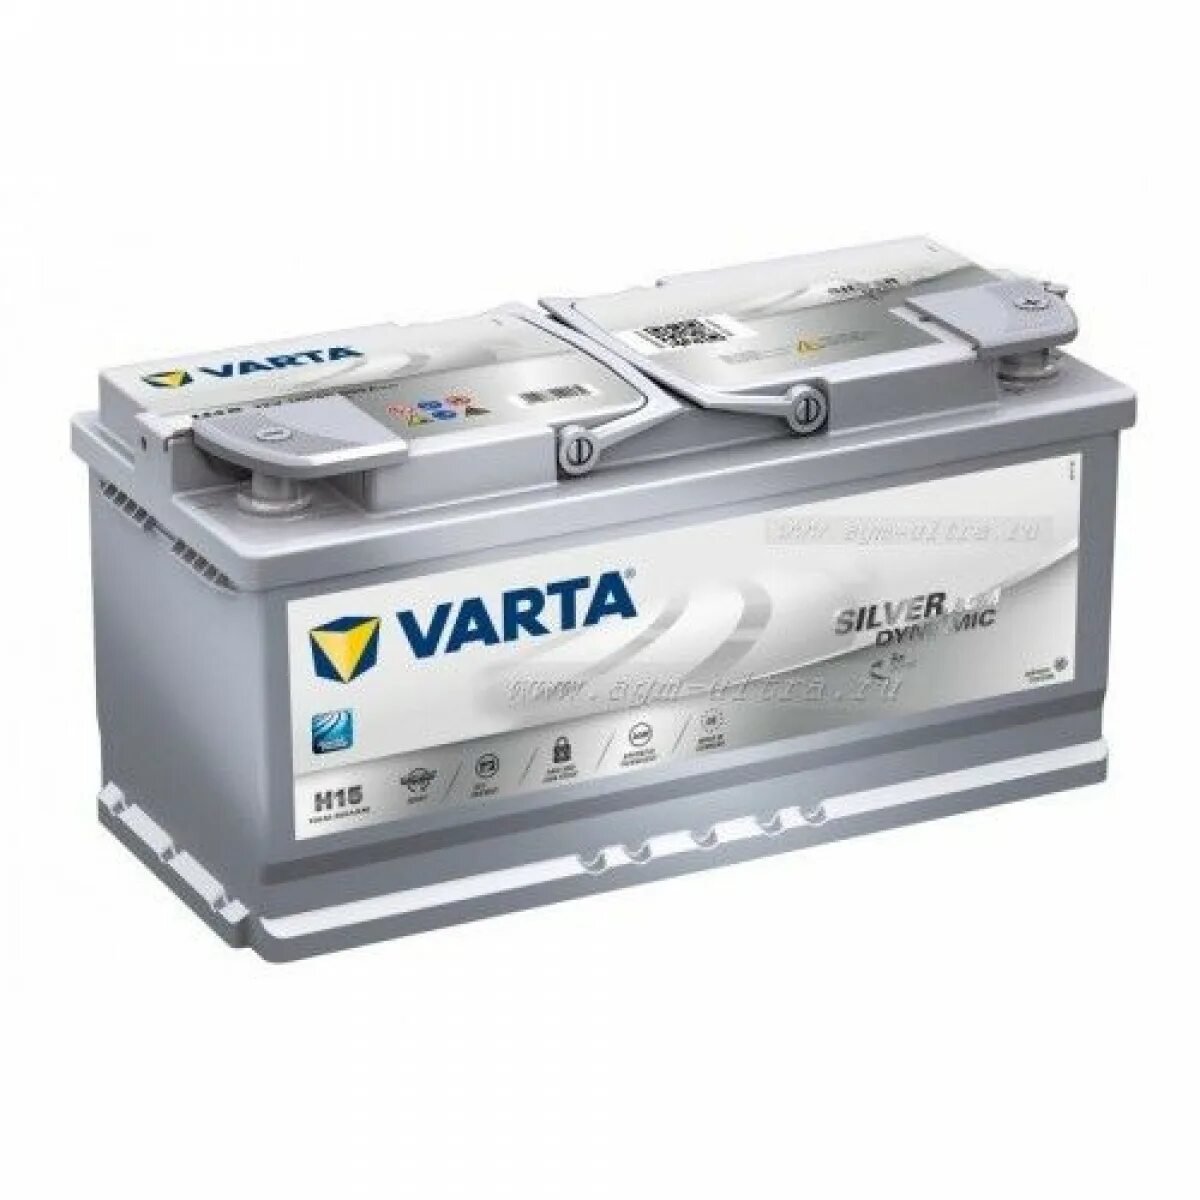 Куплю аккумулятор для автомобиля в минске. Varta start-stop Plus 6ct-80 r+. 595901085 Varta AGM. Varta Silver Dynamic g14. Varta g14 595 901 085.